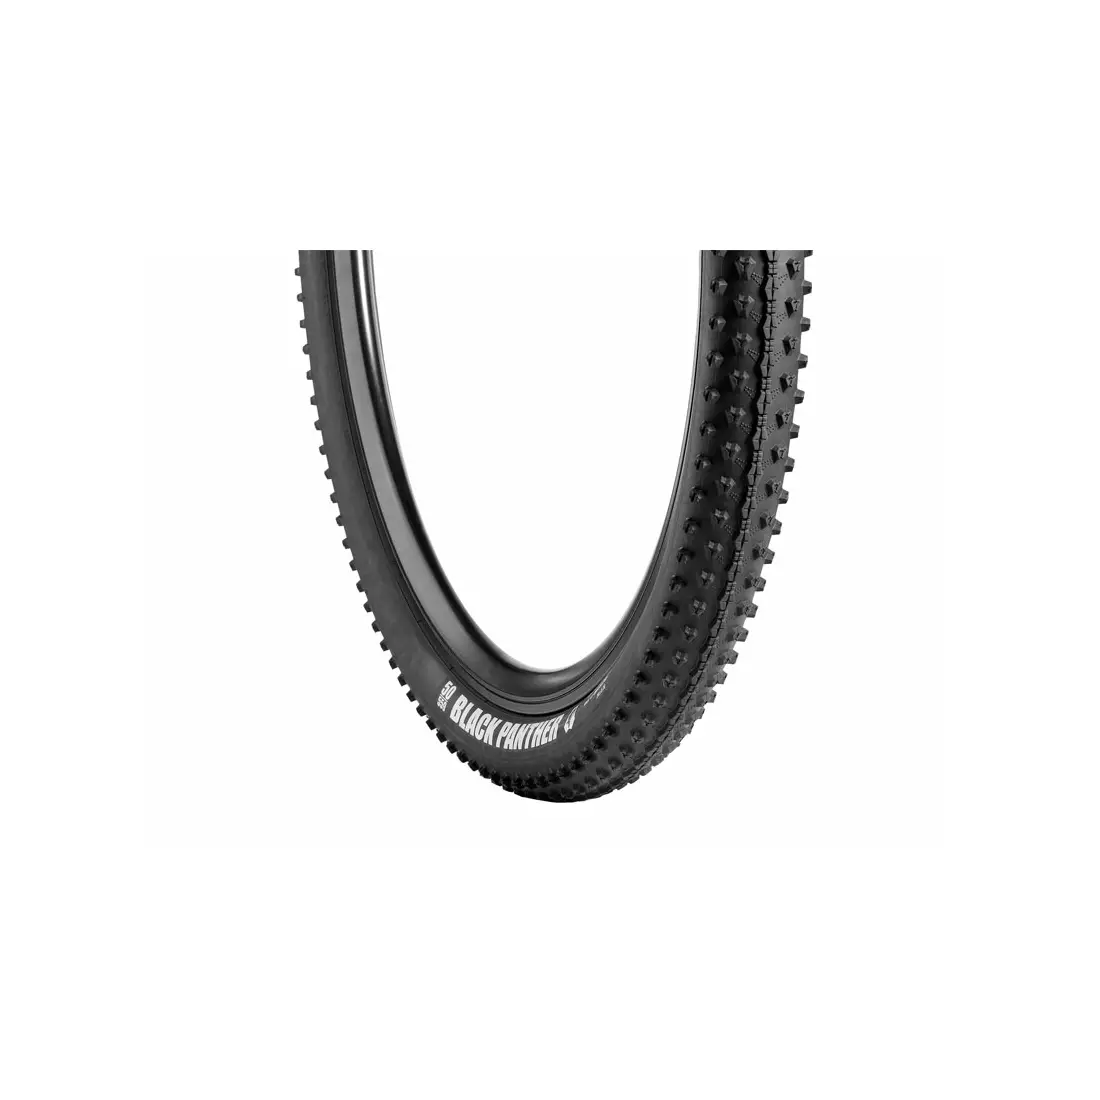 VREDESTEIN anvelope mtb pentru biciclete black panther 26x2.00 (50-559) negru rulant VRD-26141